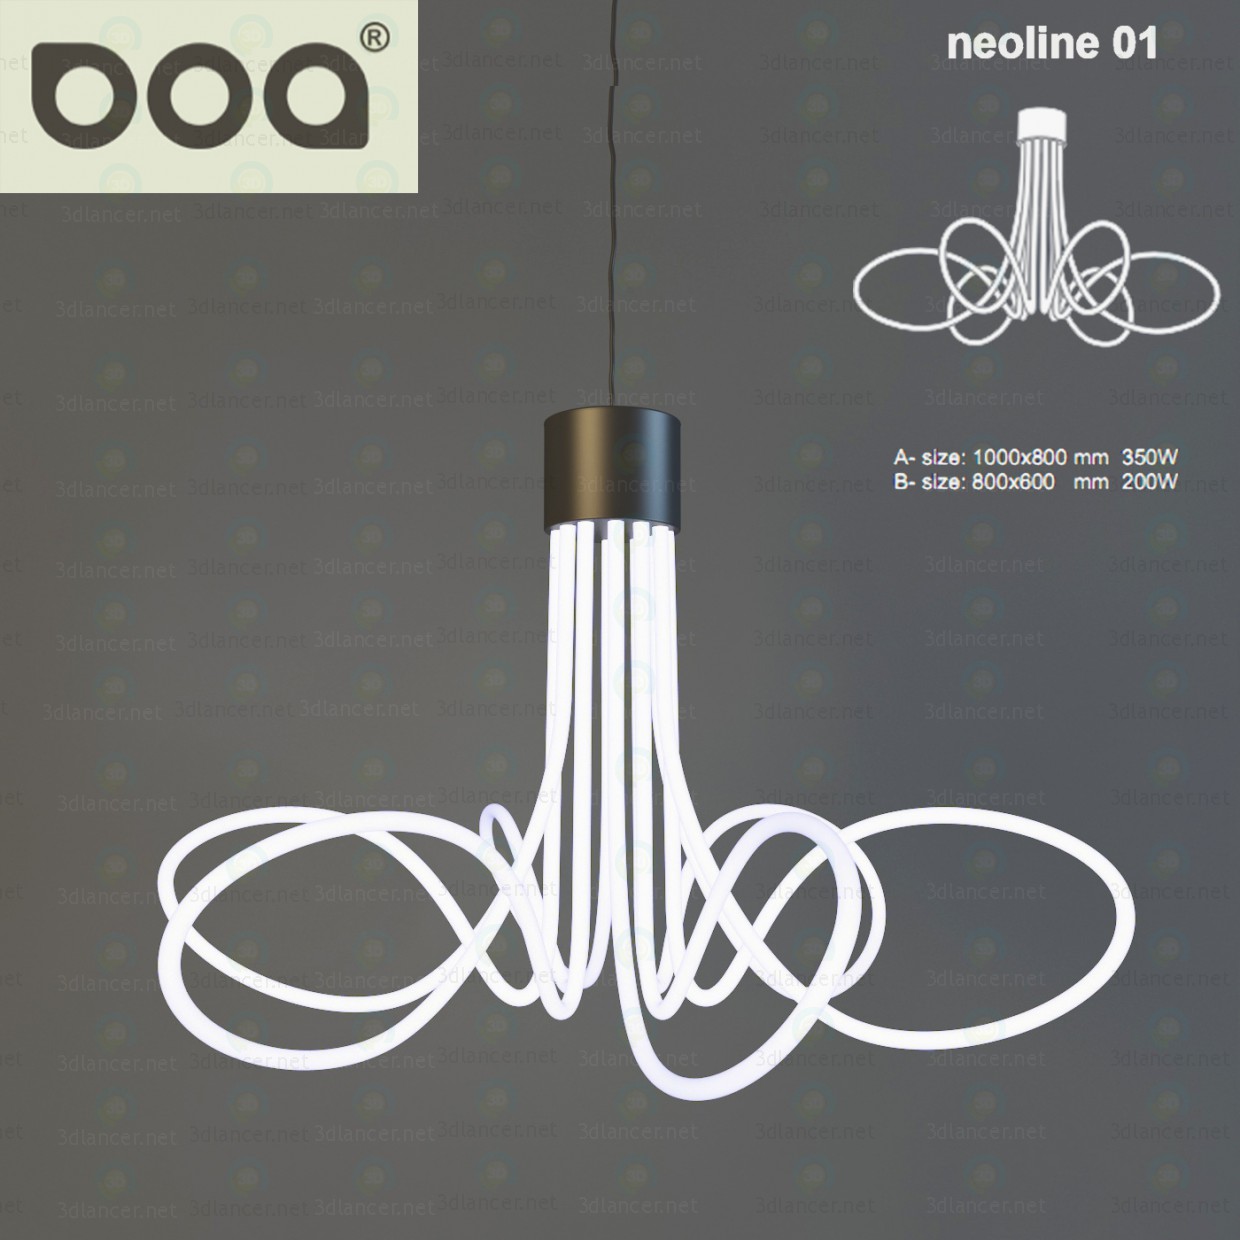 3 डी झूमर neoline 01 मॉडल खरीद - रेंडर